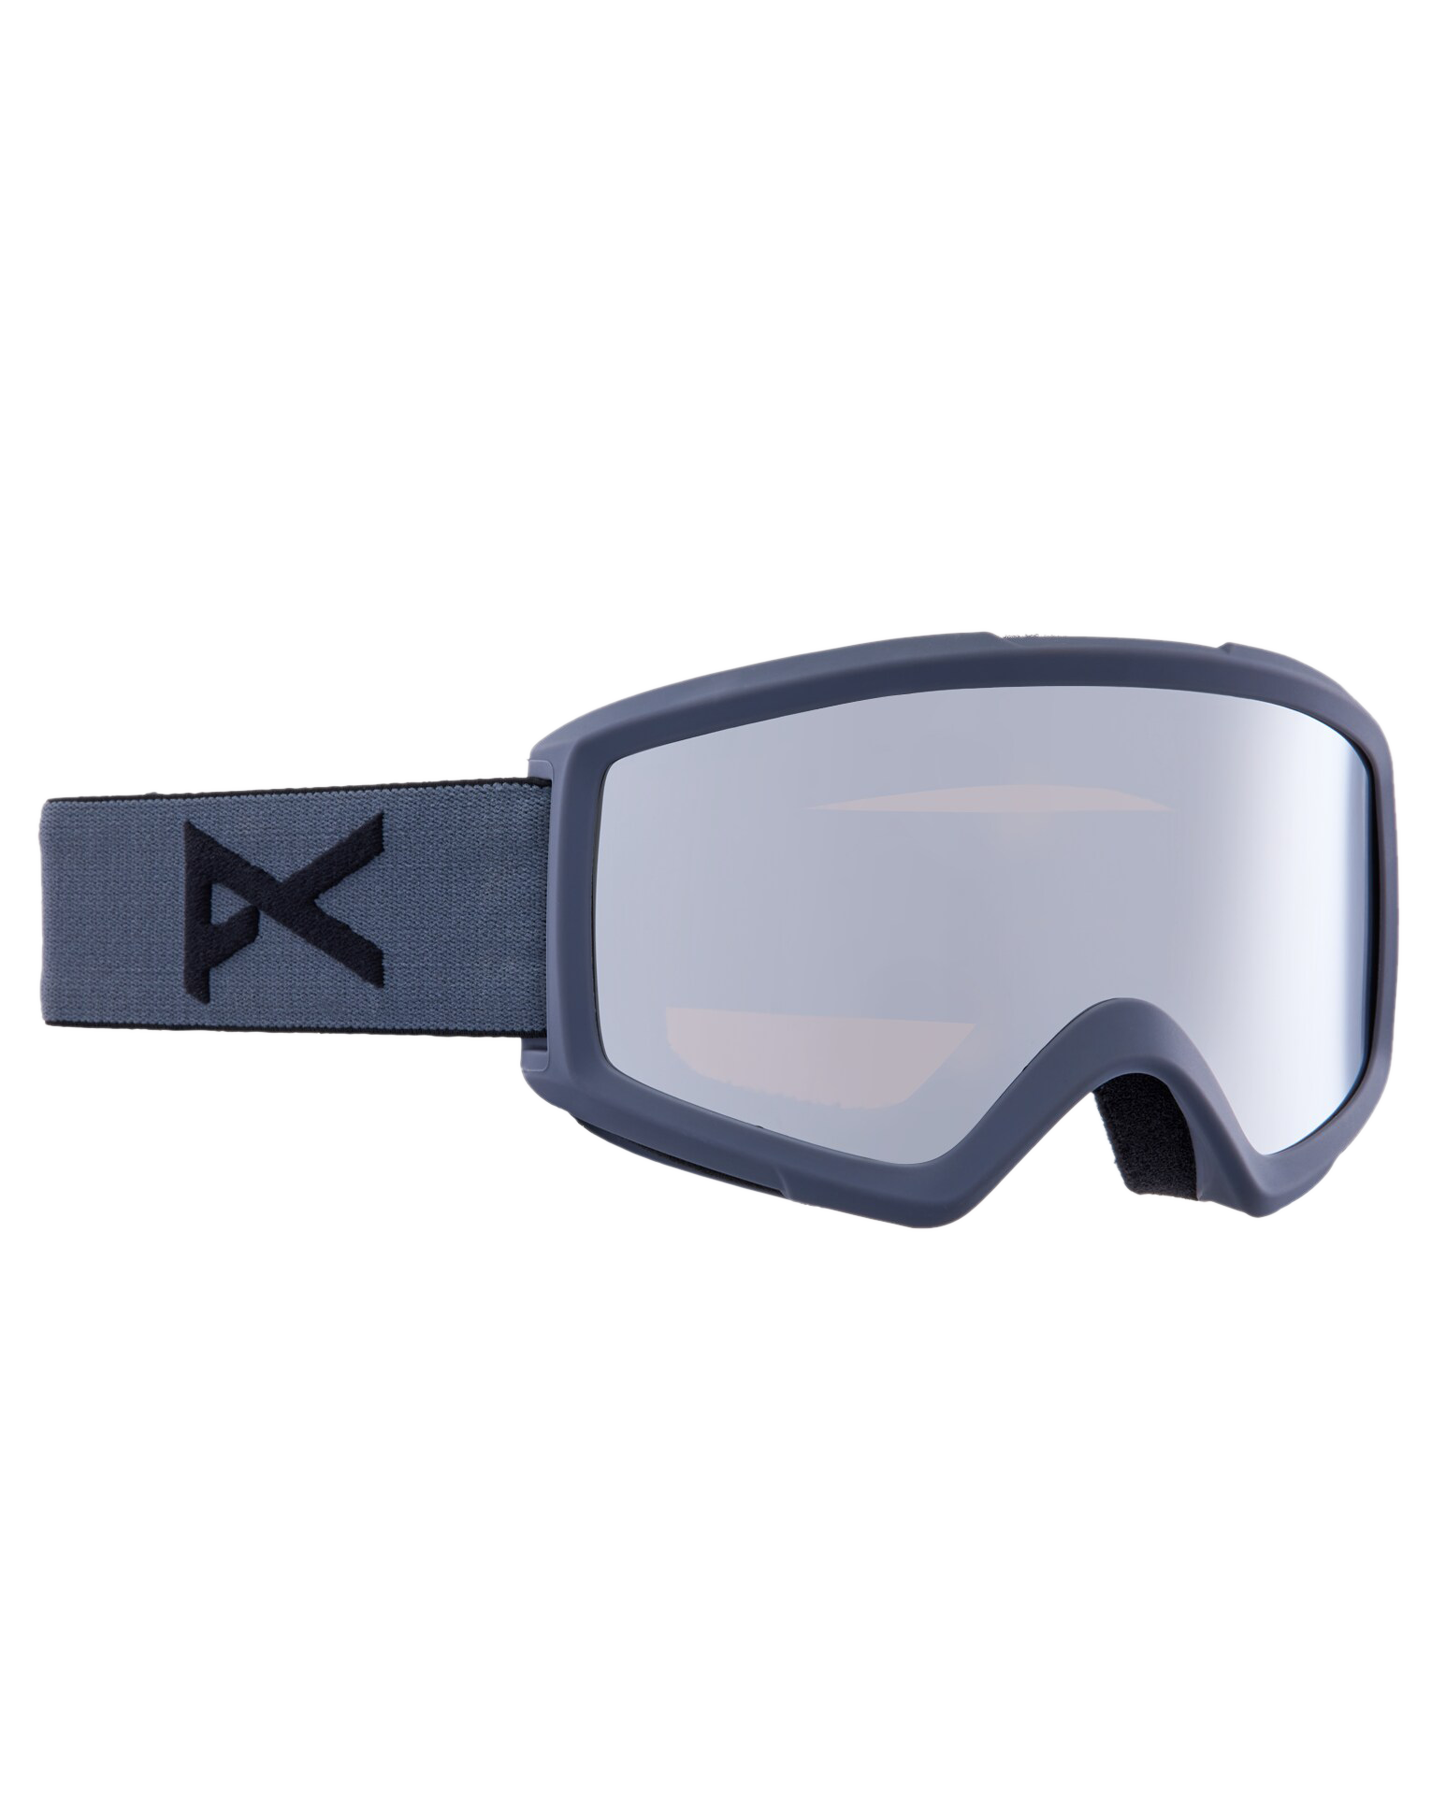 Anon Helix 2.0 Snow Goggles + Bonus Lens - Black/Silver Amber Lens Snow Goggles - Mens - Trojan Wake Ski Snow